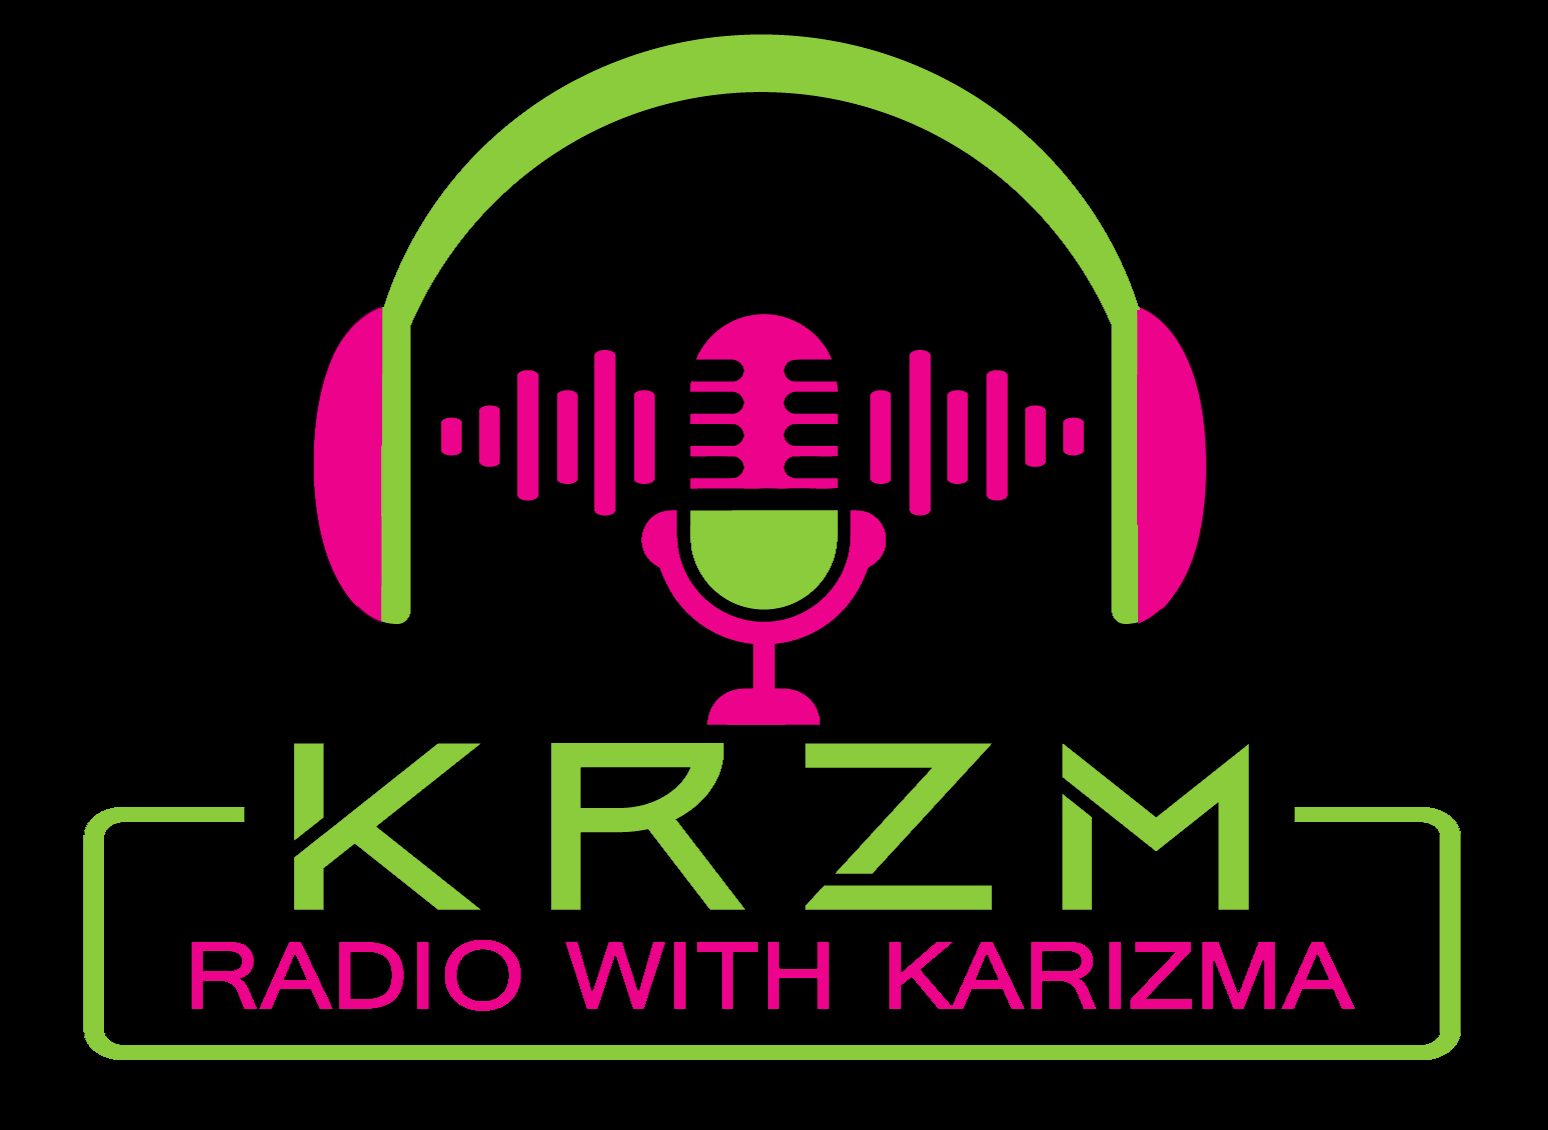 Art for KRZM Saint Paul by Radio with Karizma